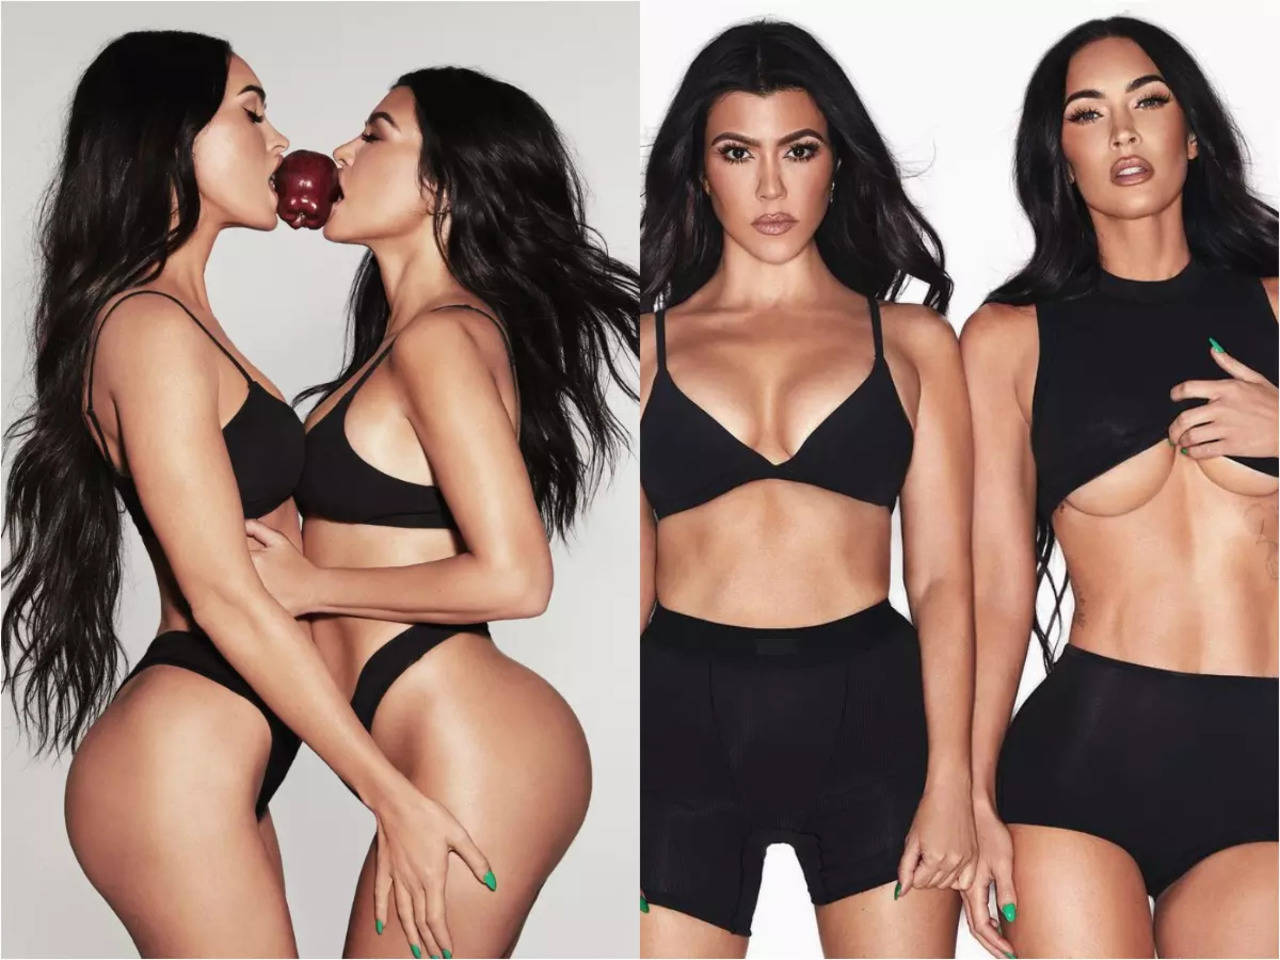 Megan Fox and Kourtney Kardashian strip in a provocative campaign for Kim Kardashian